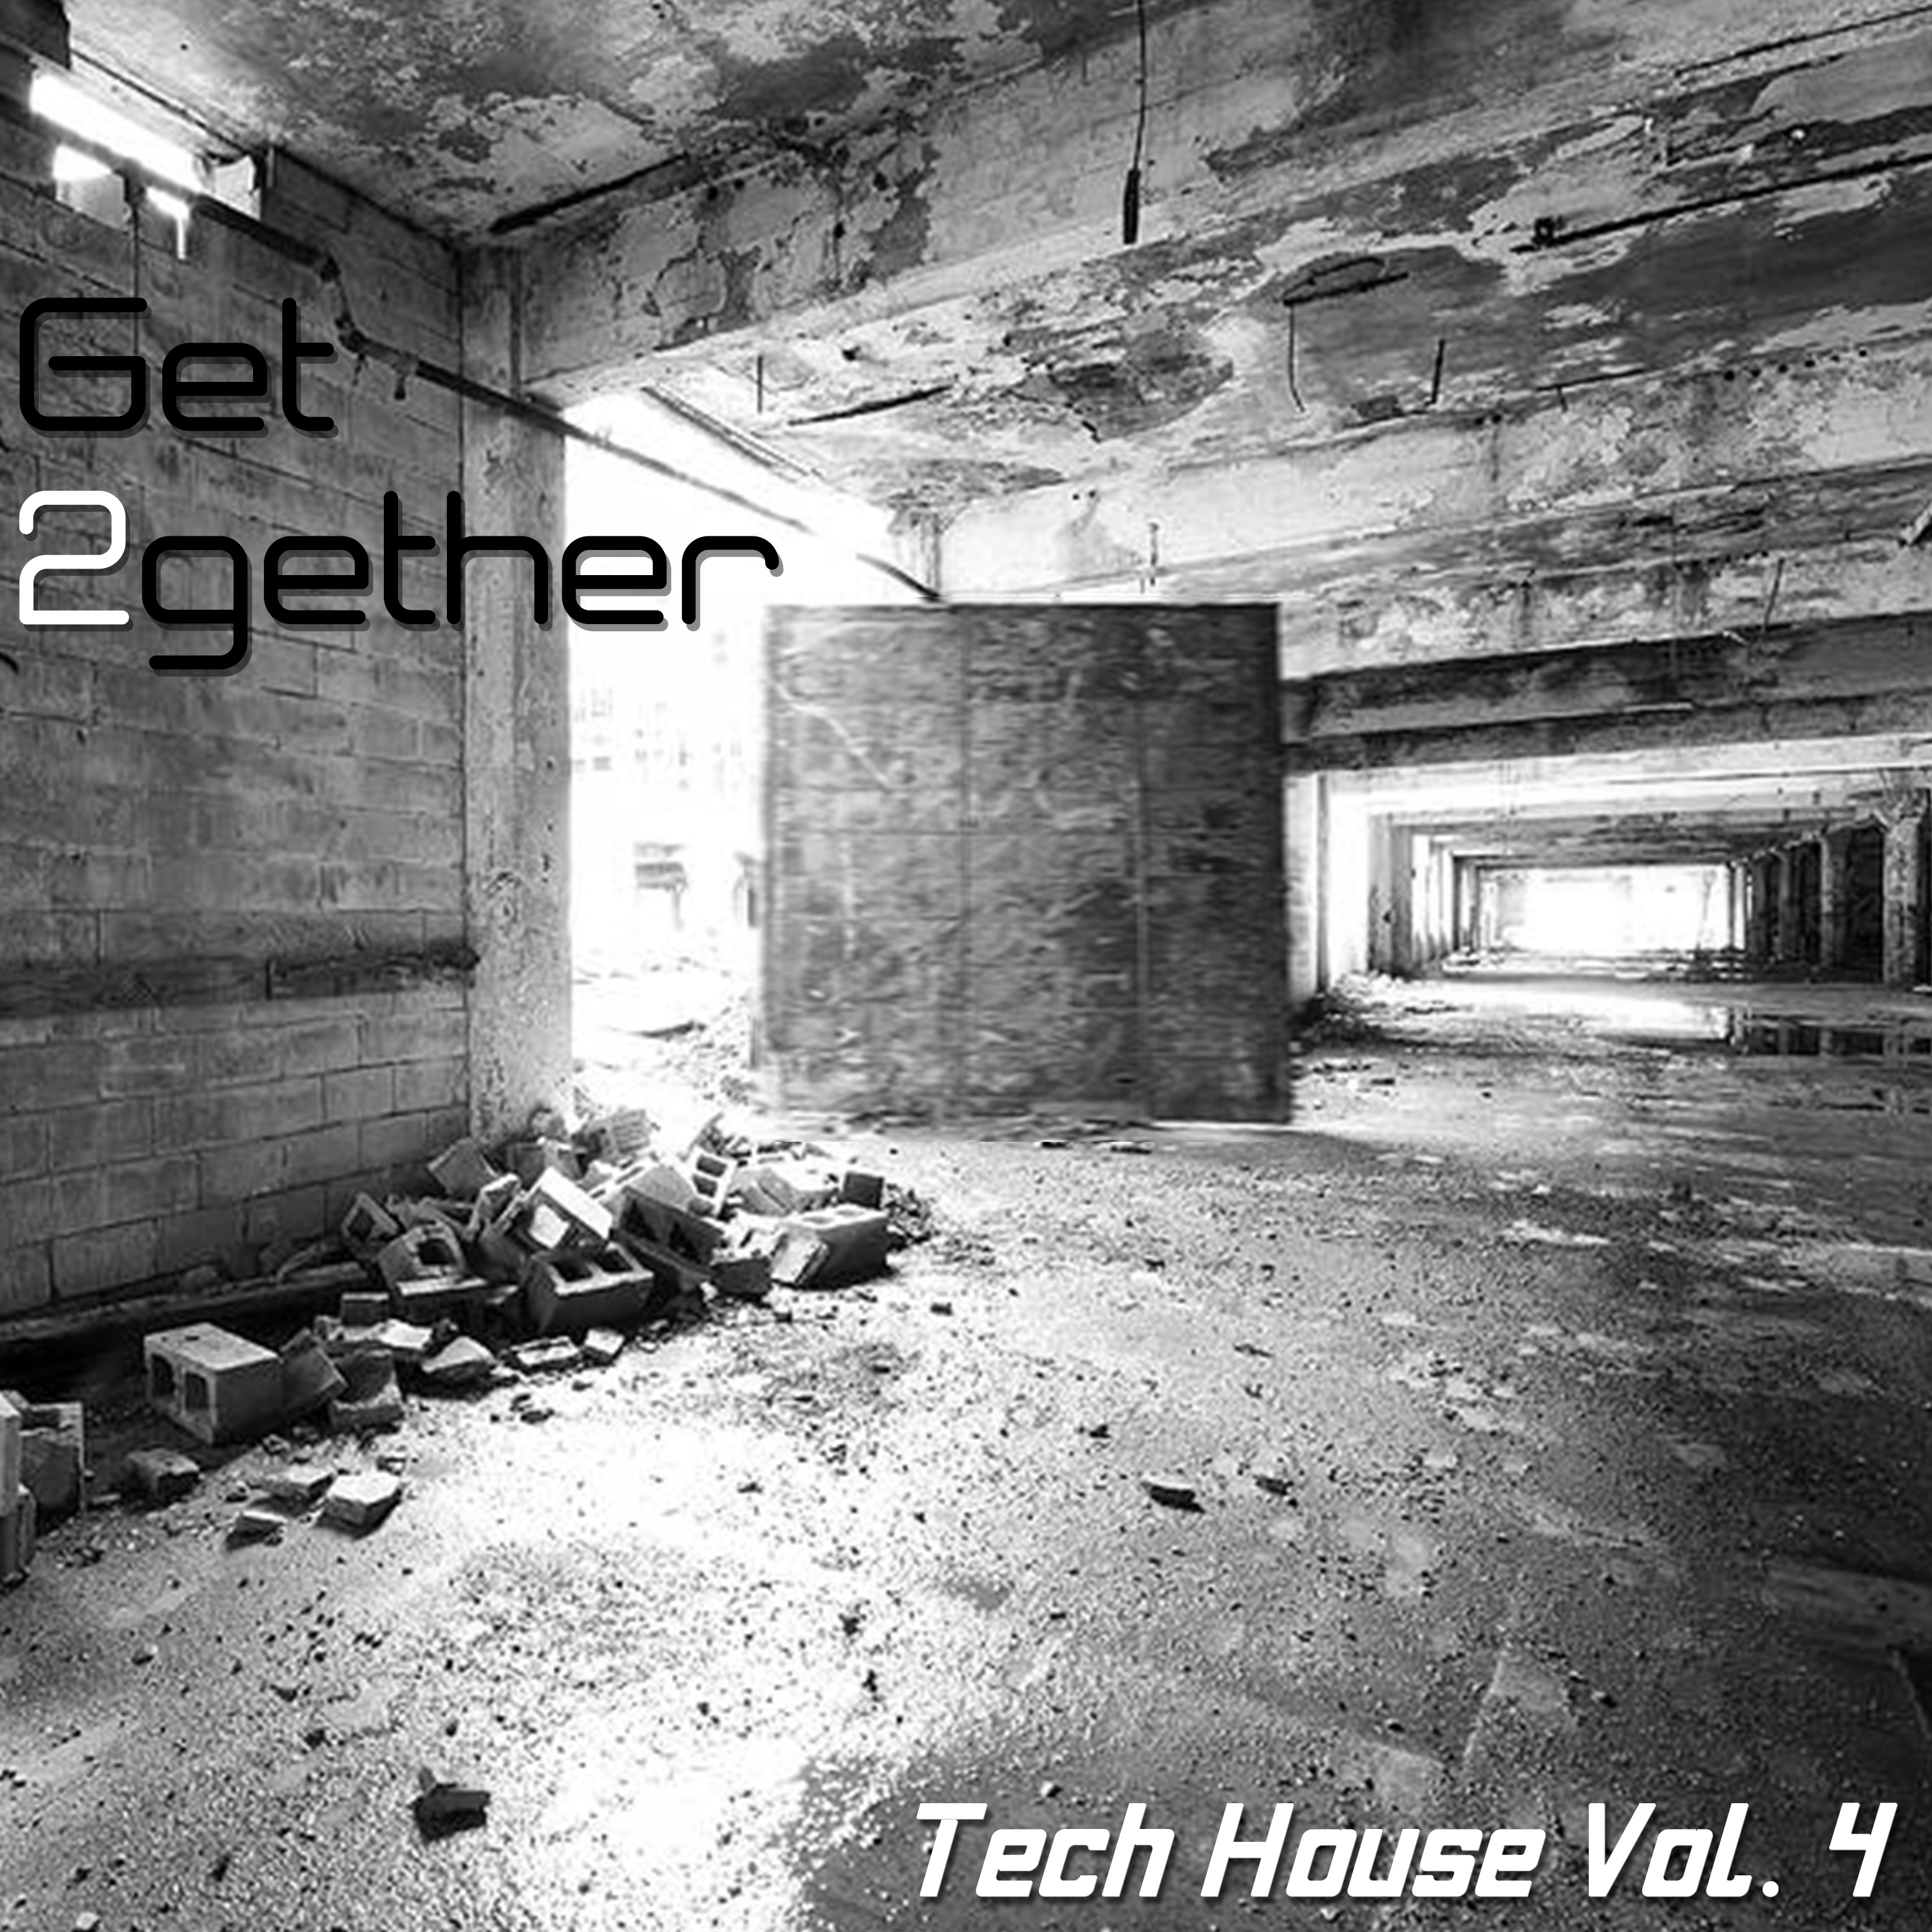 Get 2gether Tech House, Vol. 4